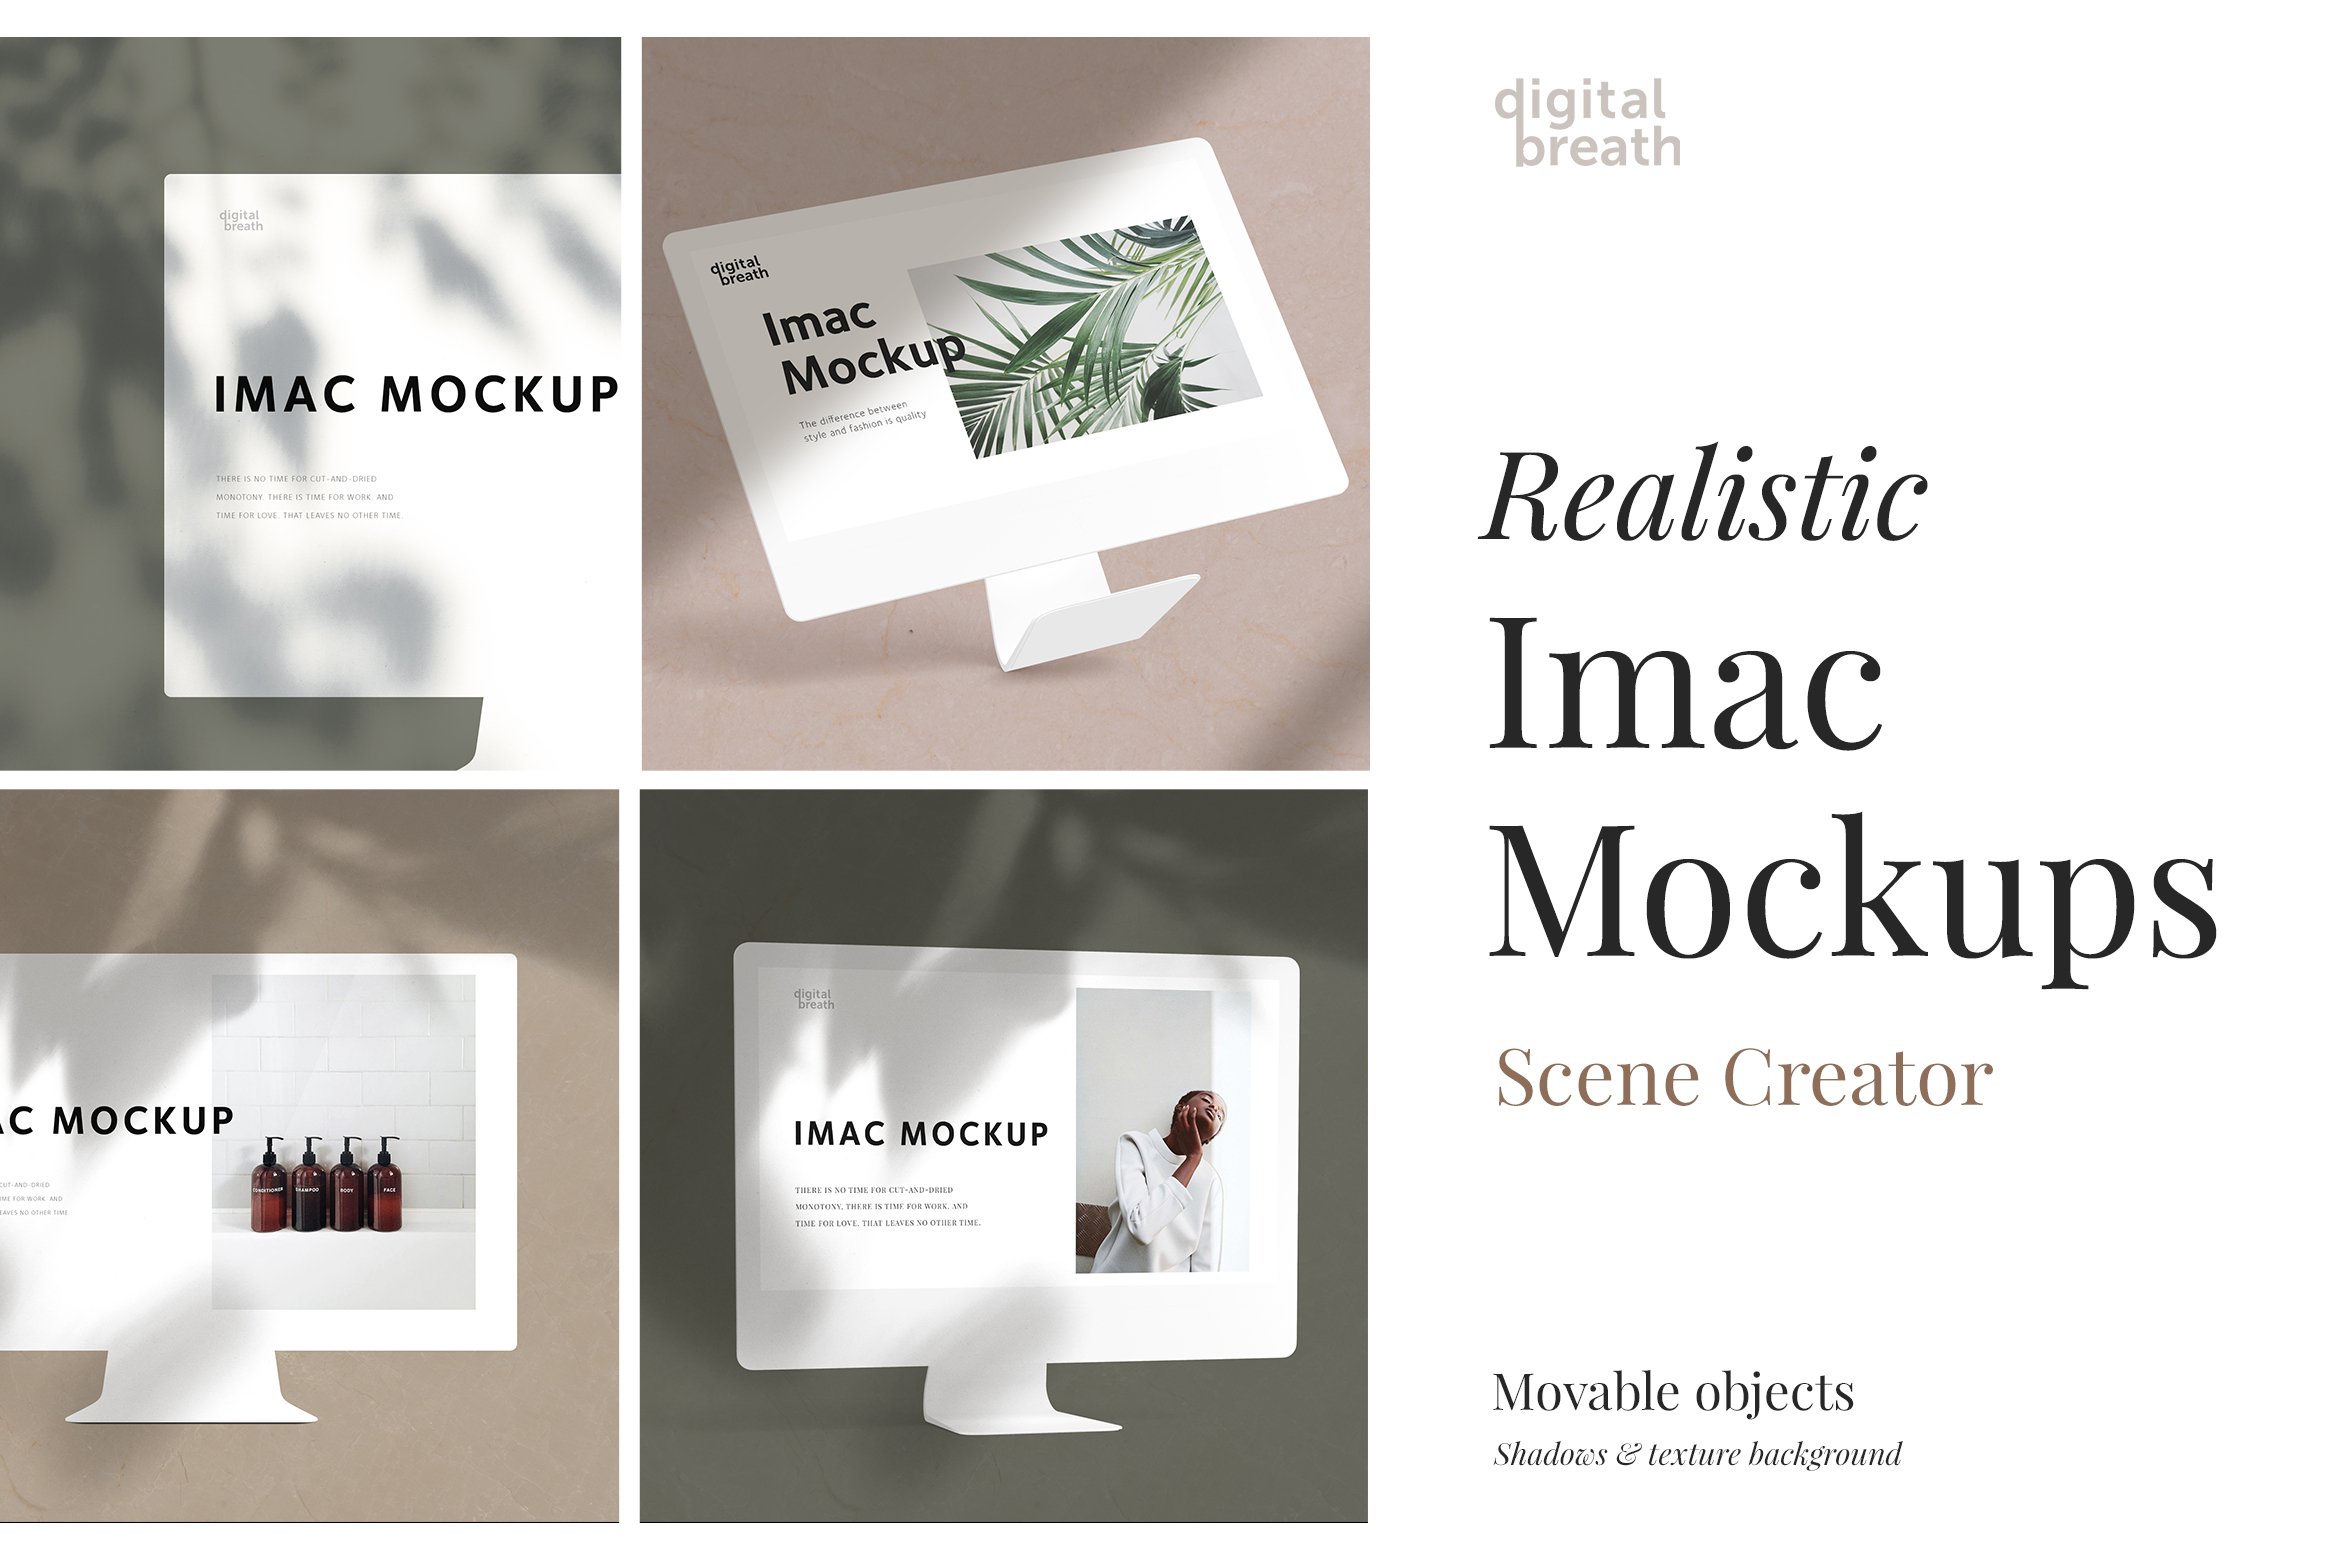 Imac mockups - scene creator cover image.